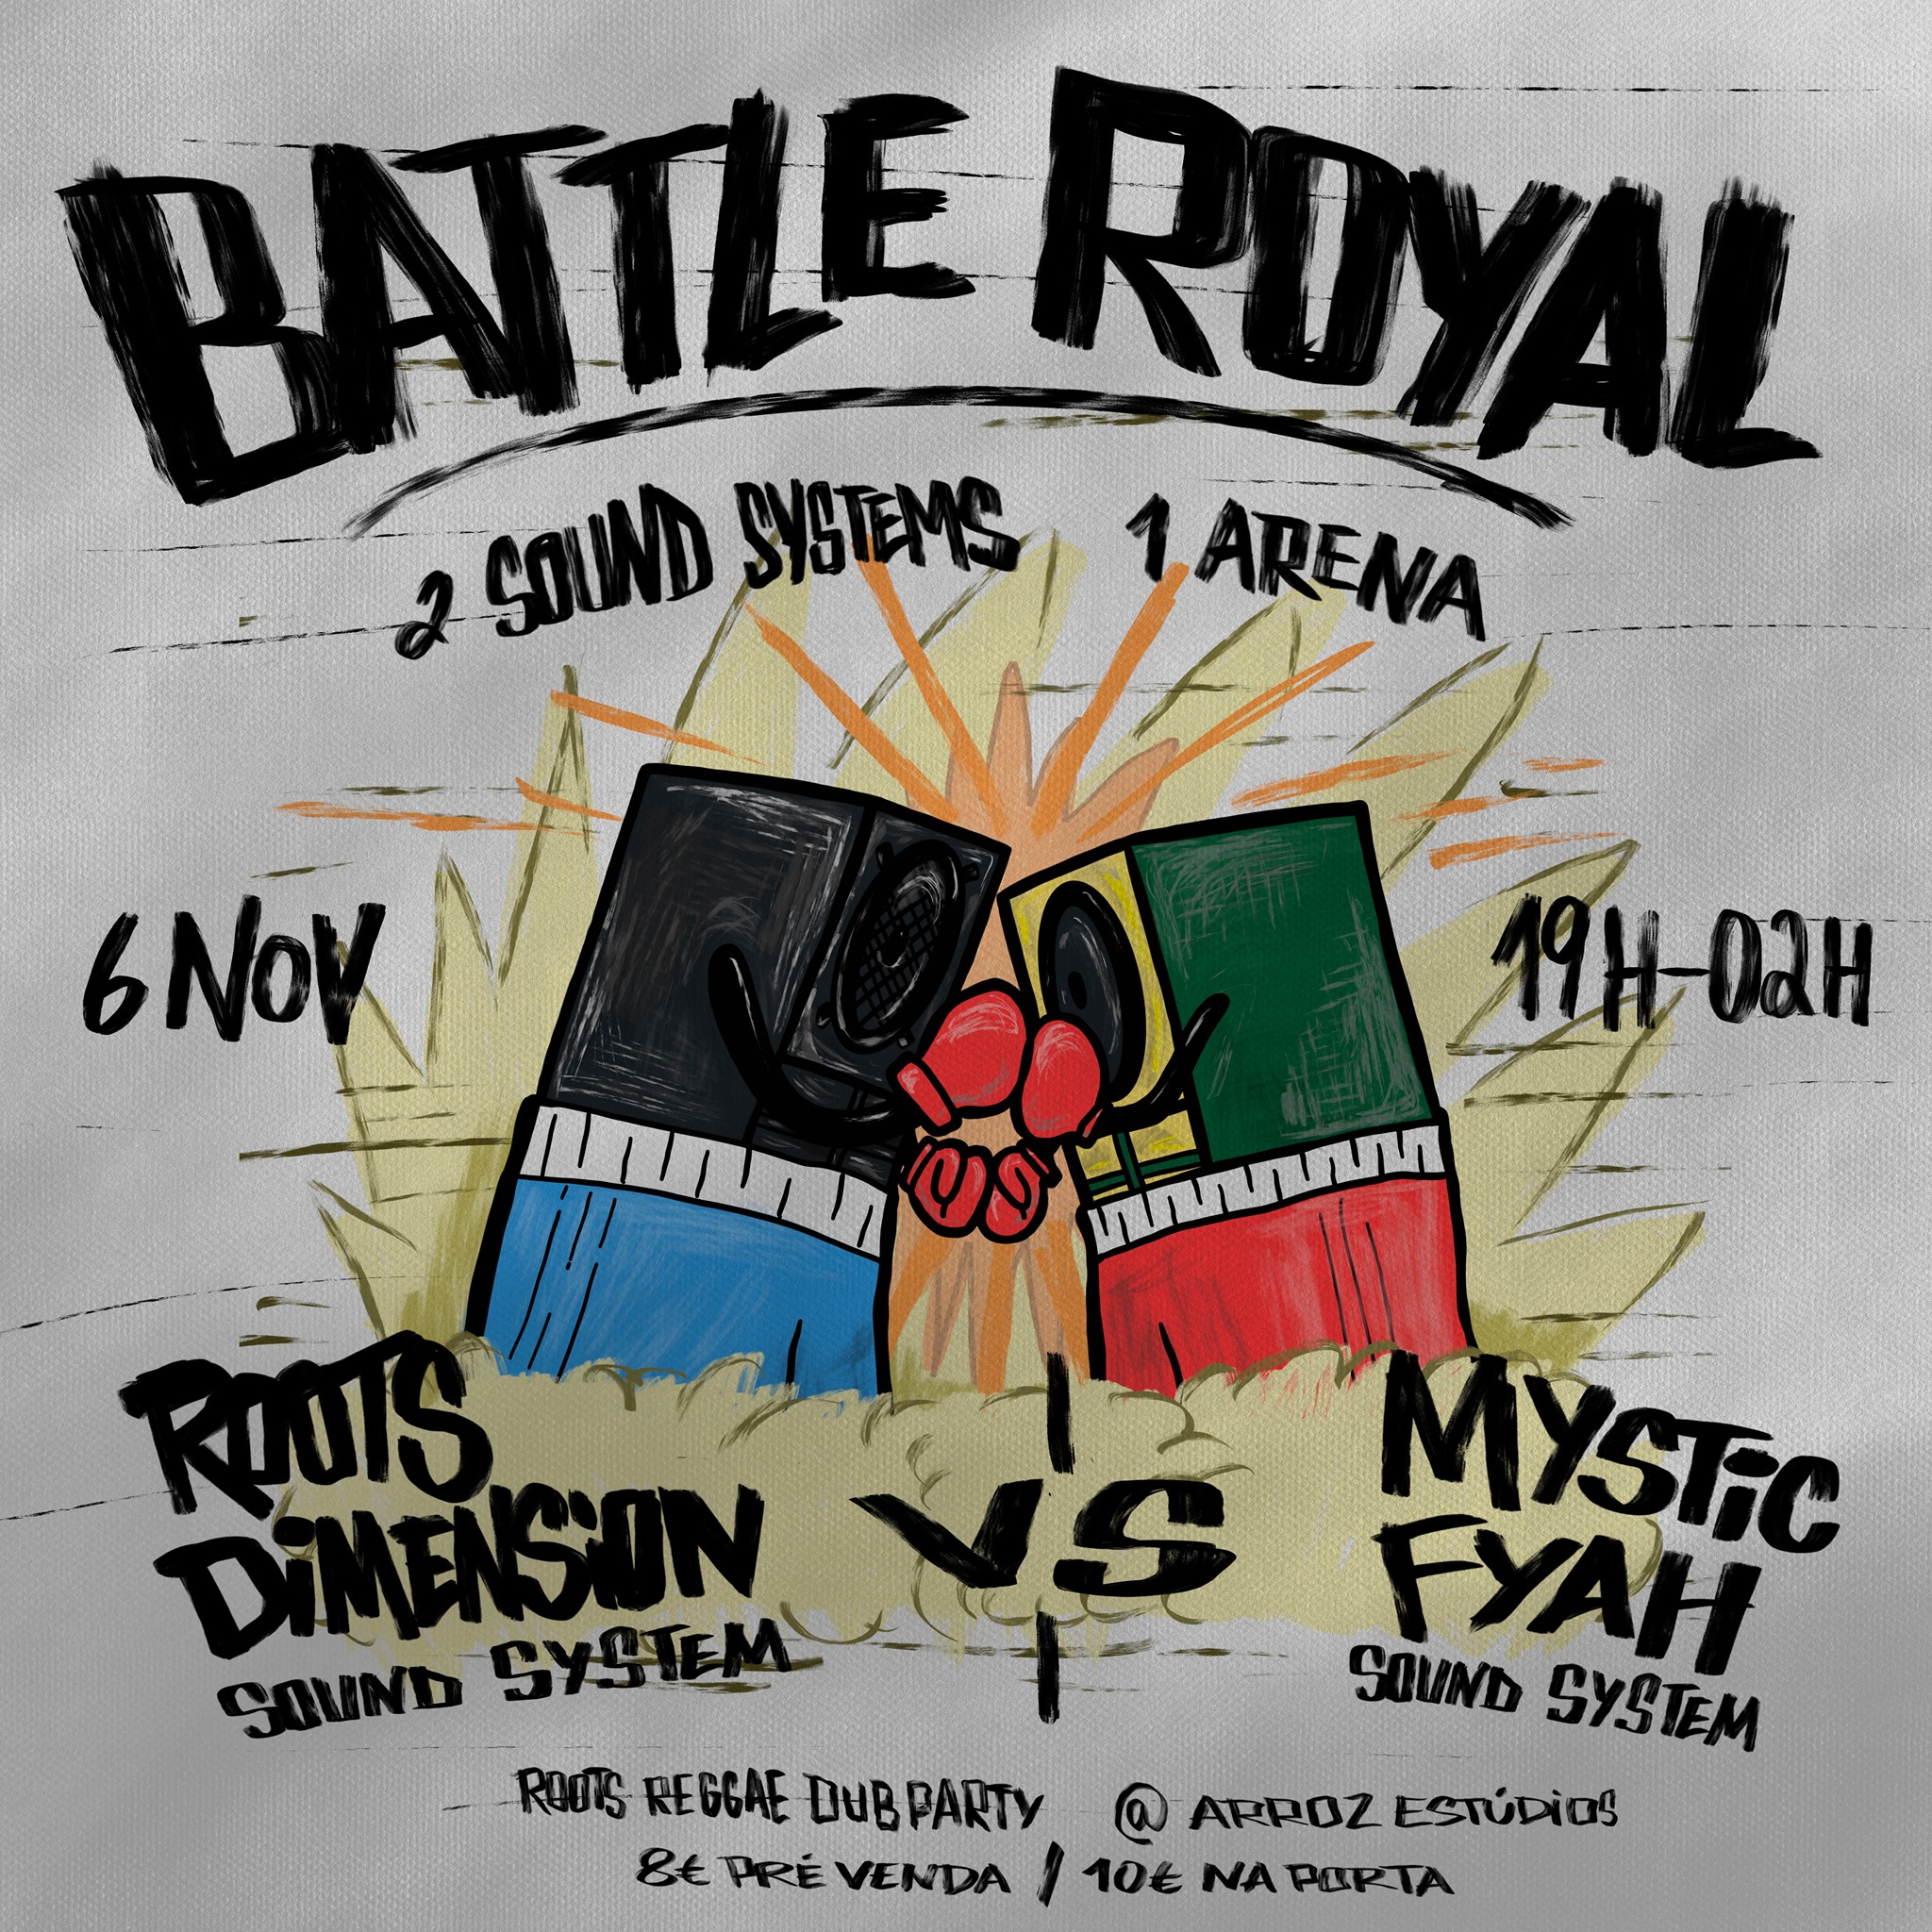 BATTLE ROYAL  - 2 Soundsystems 1 Arena - Roots Dimension vs Mystic Fyah